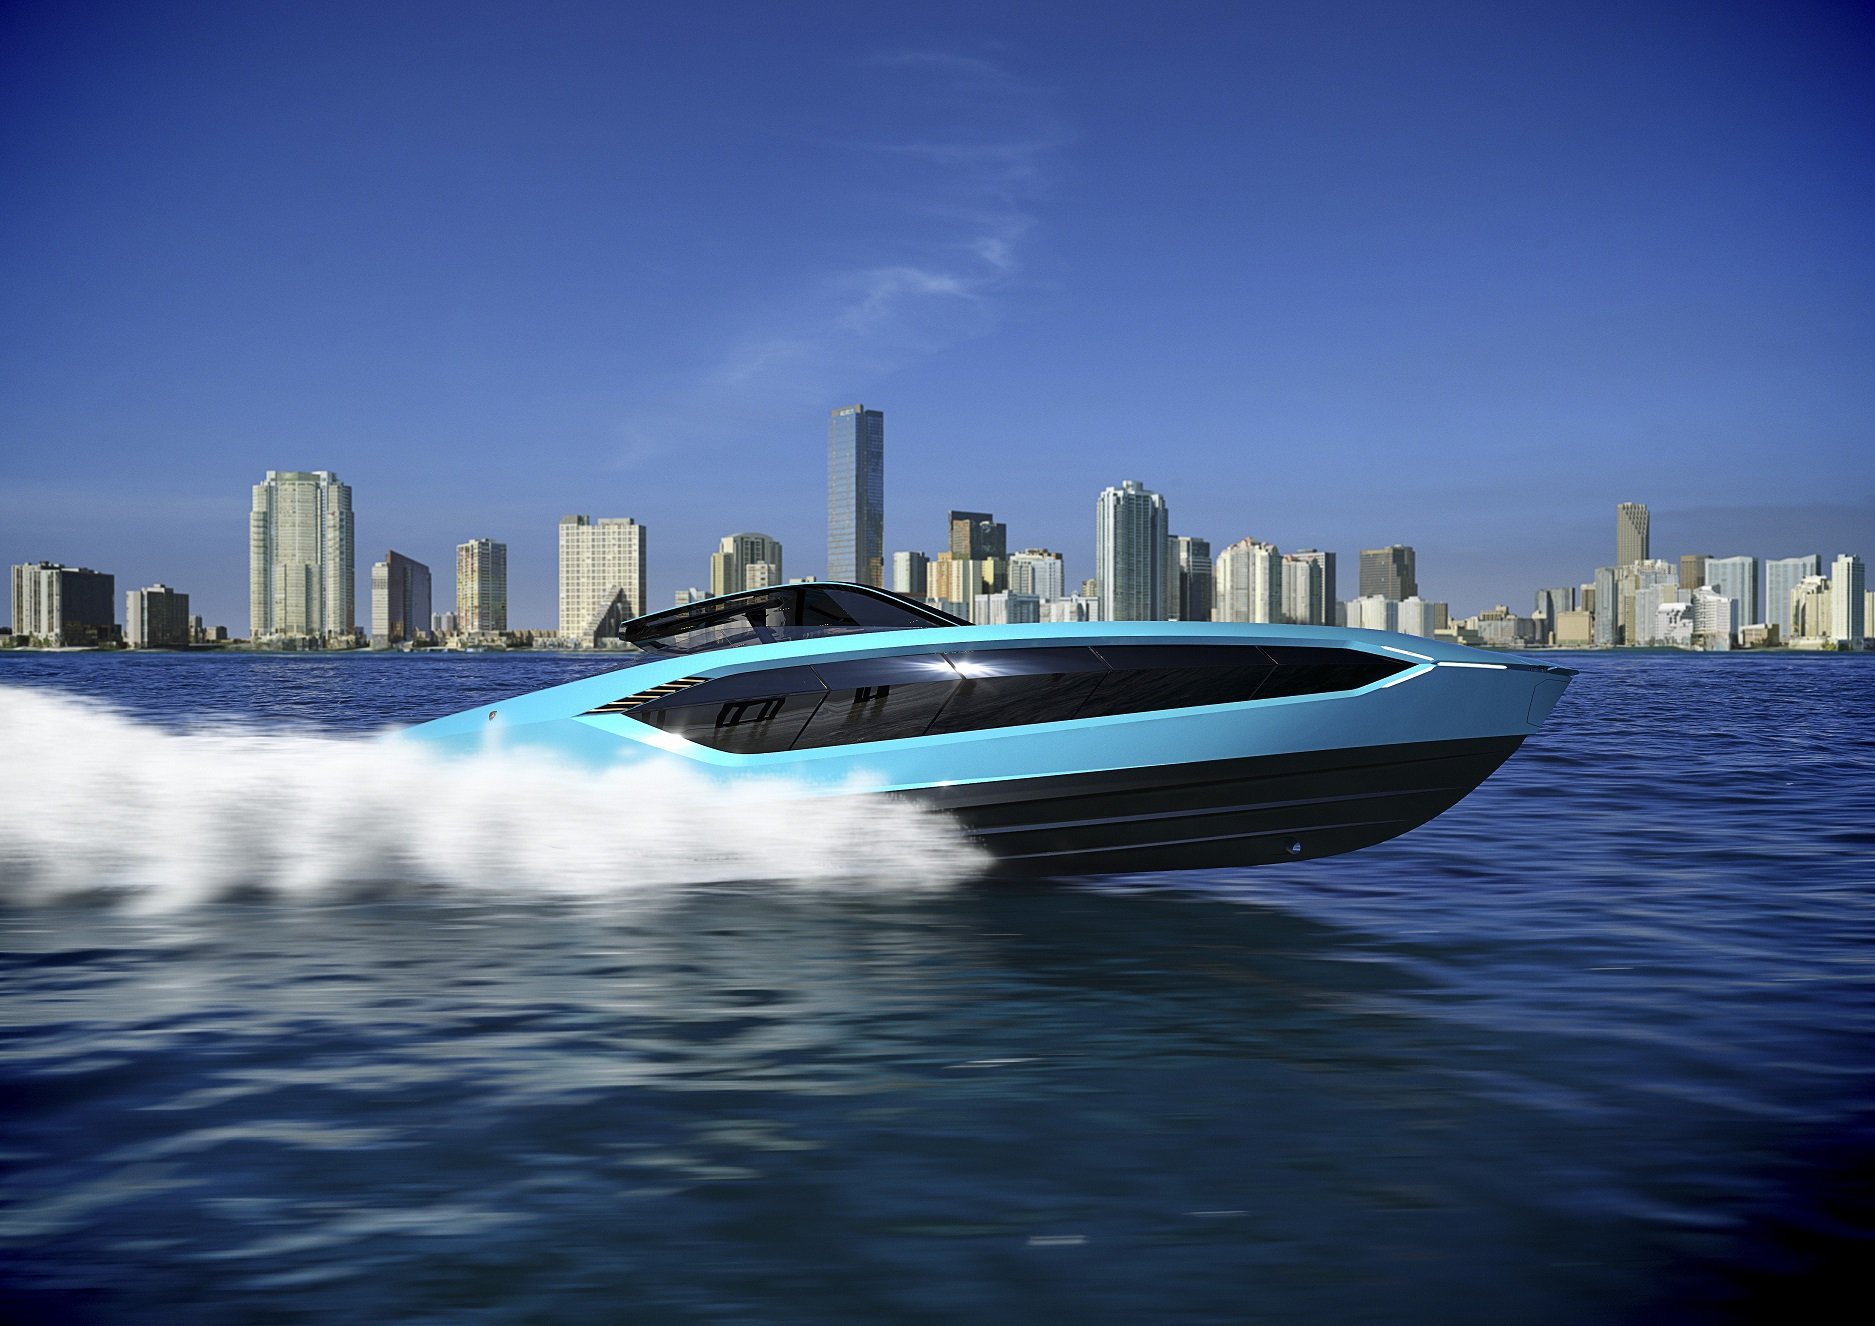 Lamborghini Dubai & Abu Dhabi appointed official distributor of luxury yacht Tecnomar for Lamborghini 63 in UAE